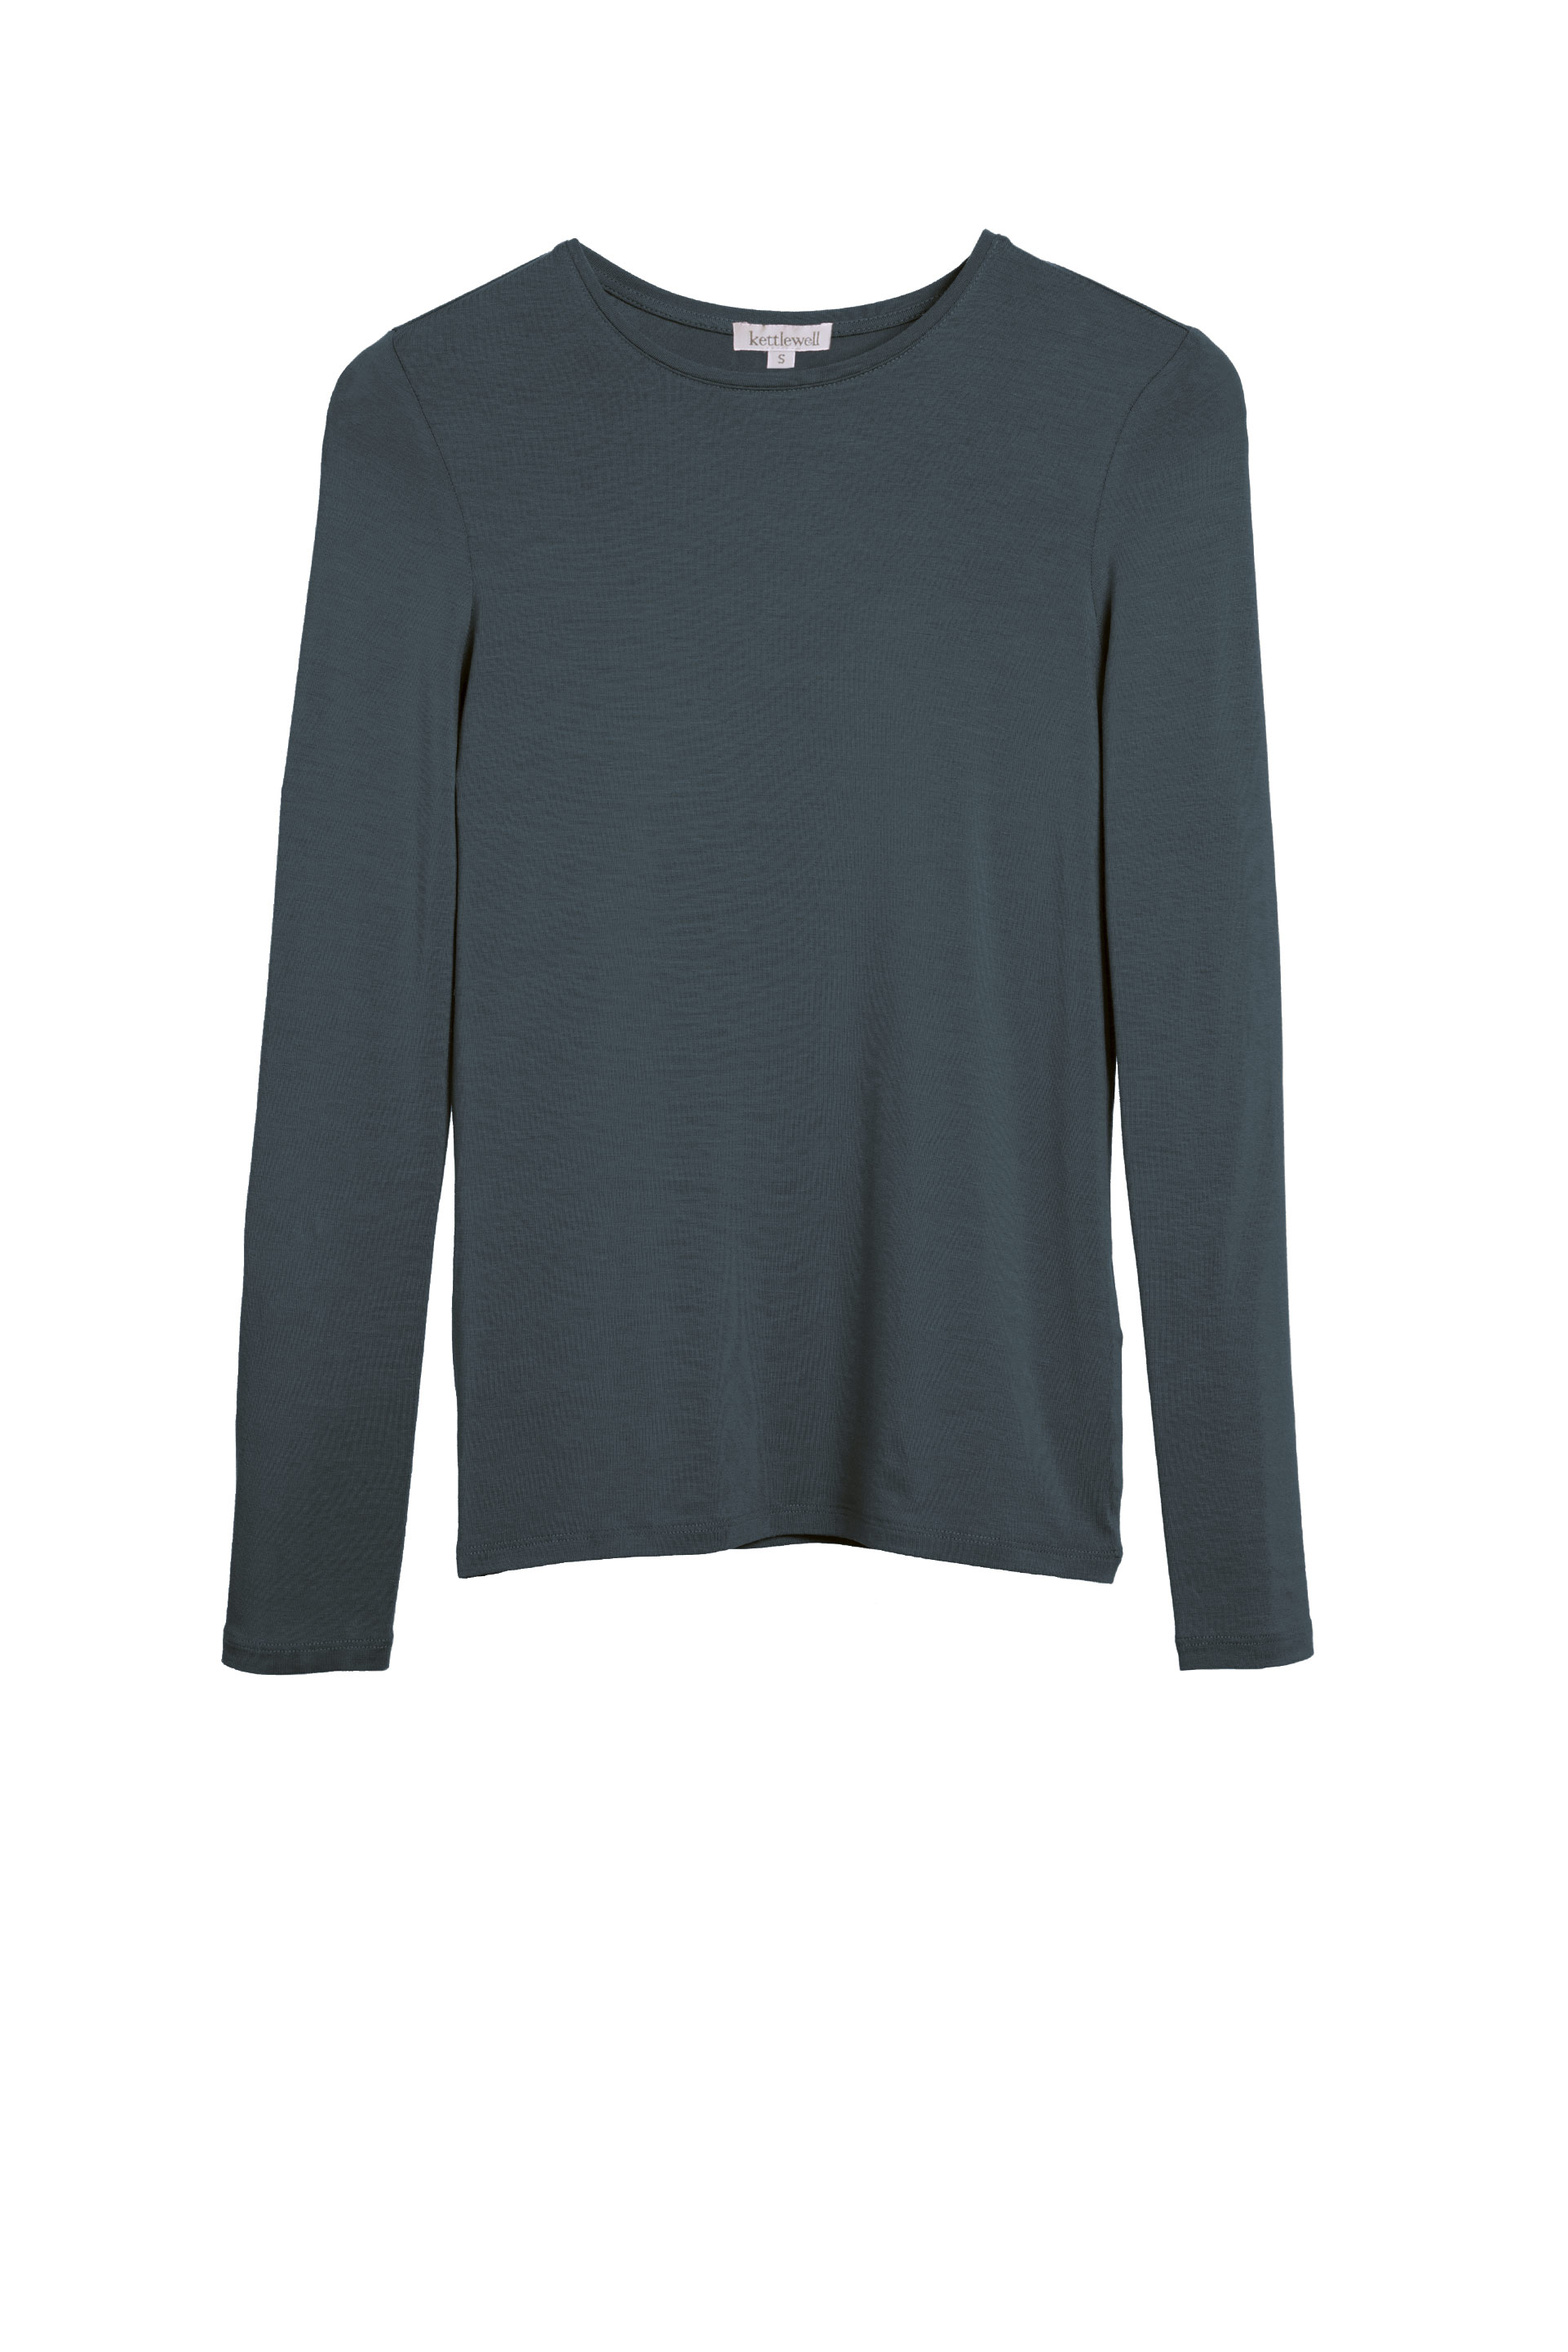 Viridian Green Cotton Seam Detail Blouse - Women's Long Sleeve Shirts